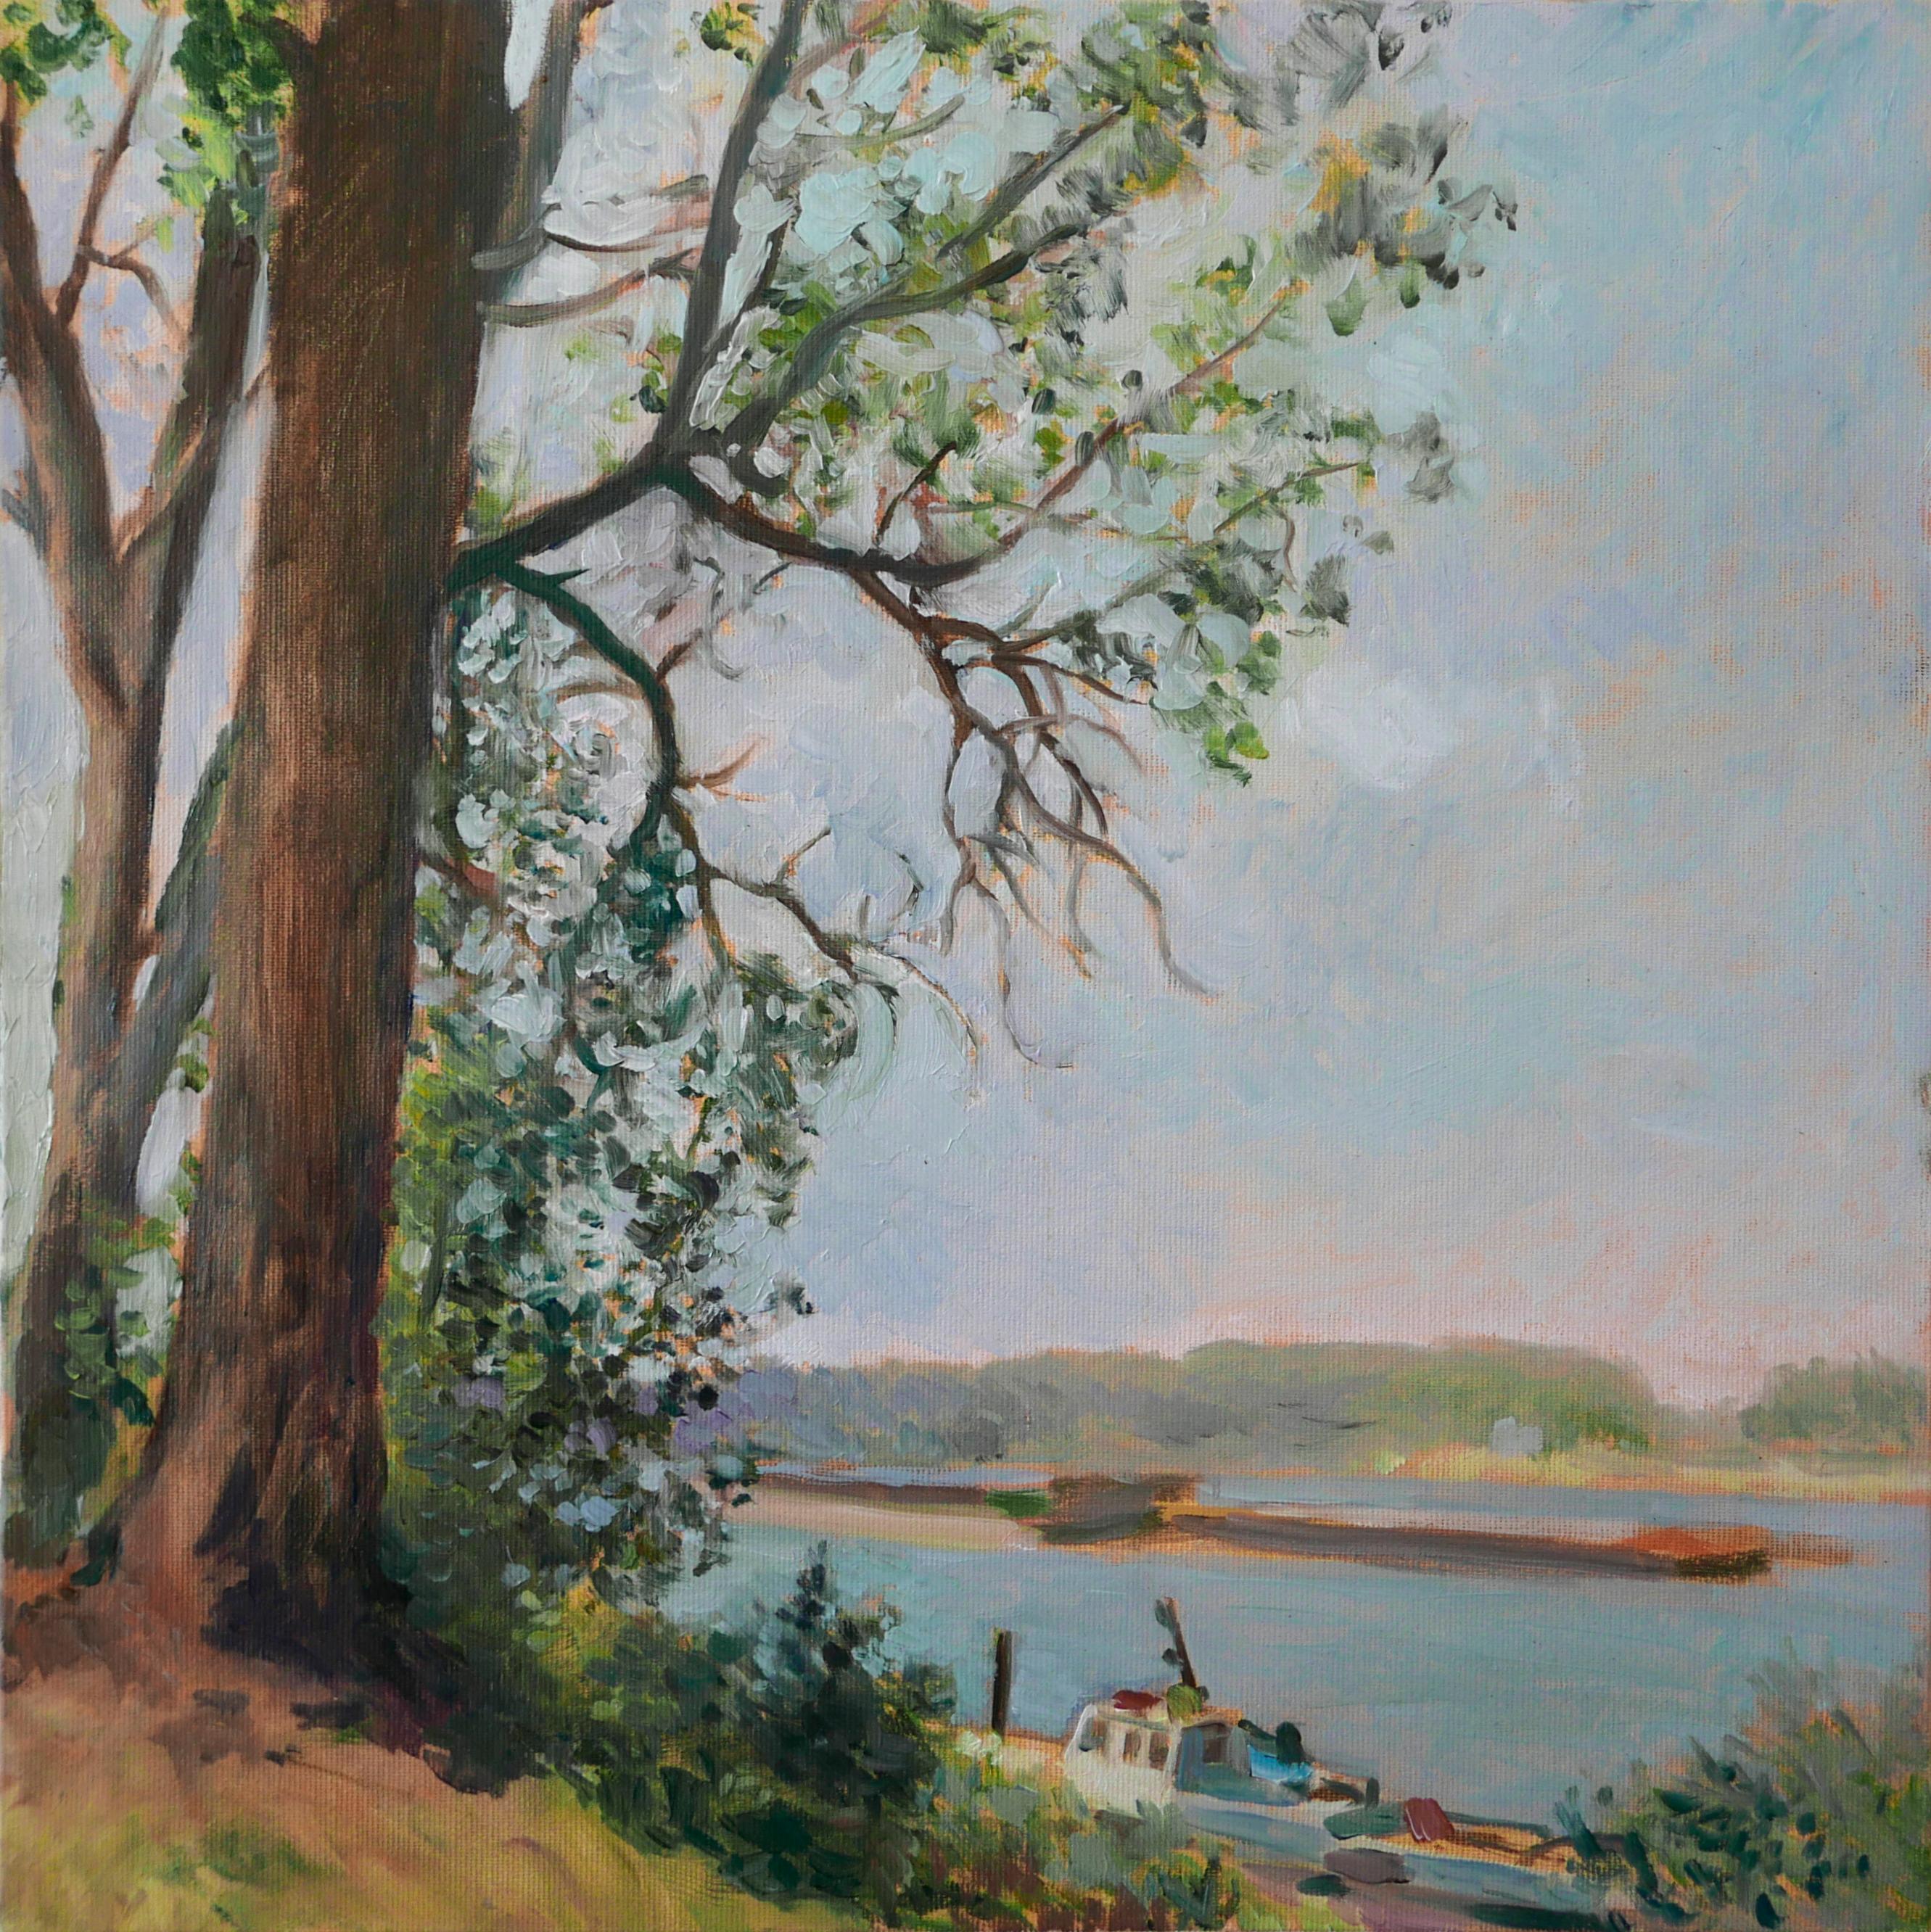 Petya Deneva Landscape Painting - Alongside The Danube River - Oil Painting Colors White Yellow Blue Brown Green